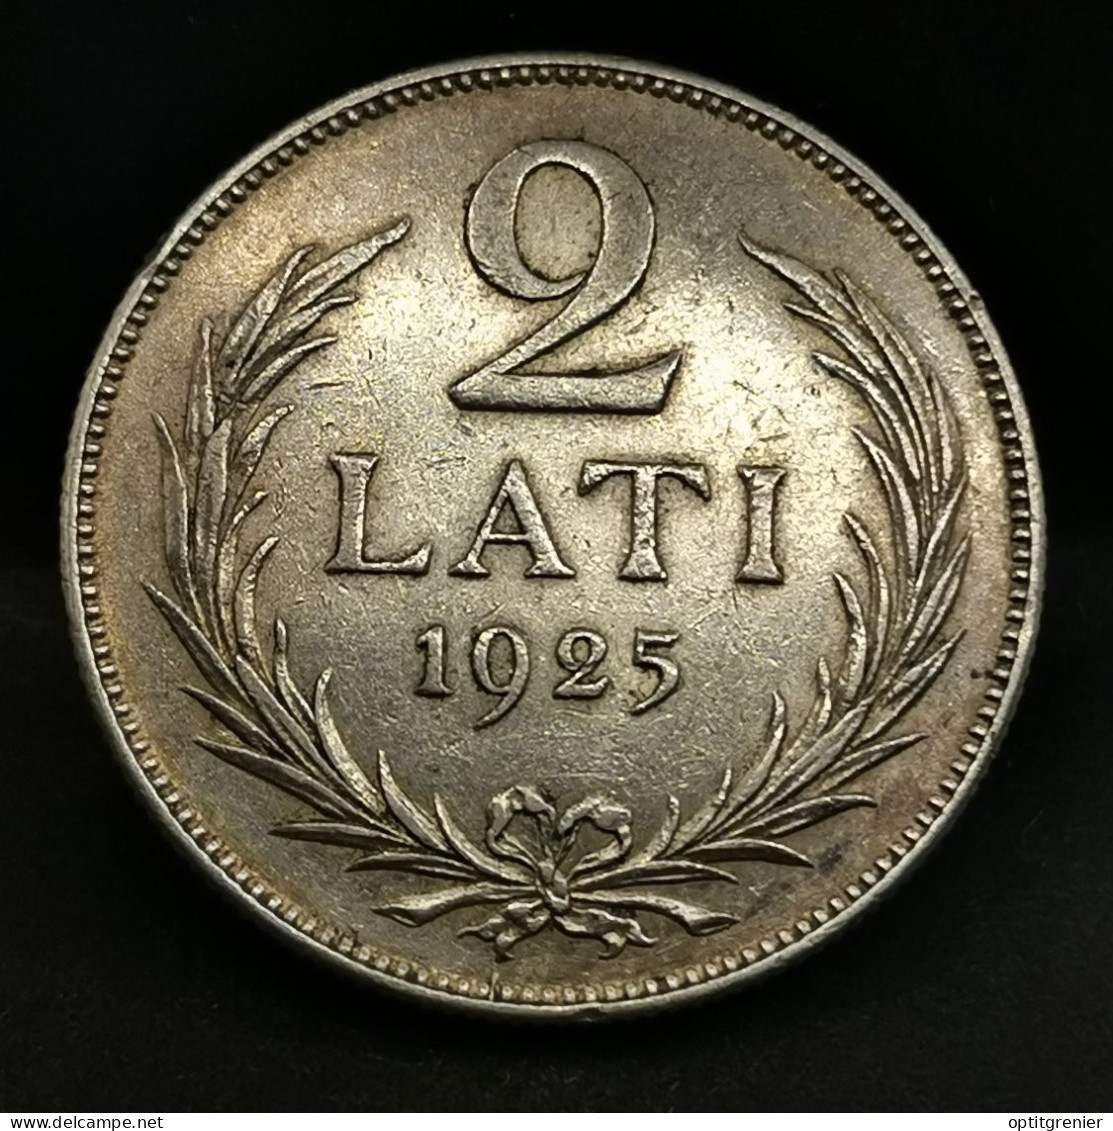 2 LATI 1925 ARGENT LETTONIE / SILVER - Letonia